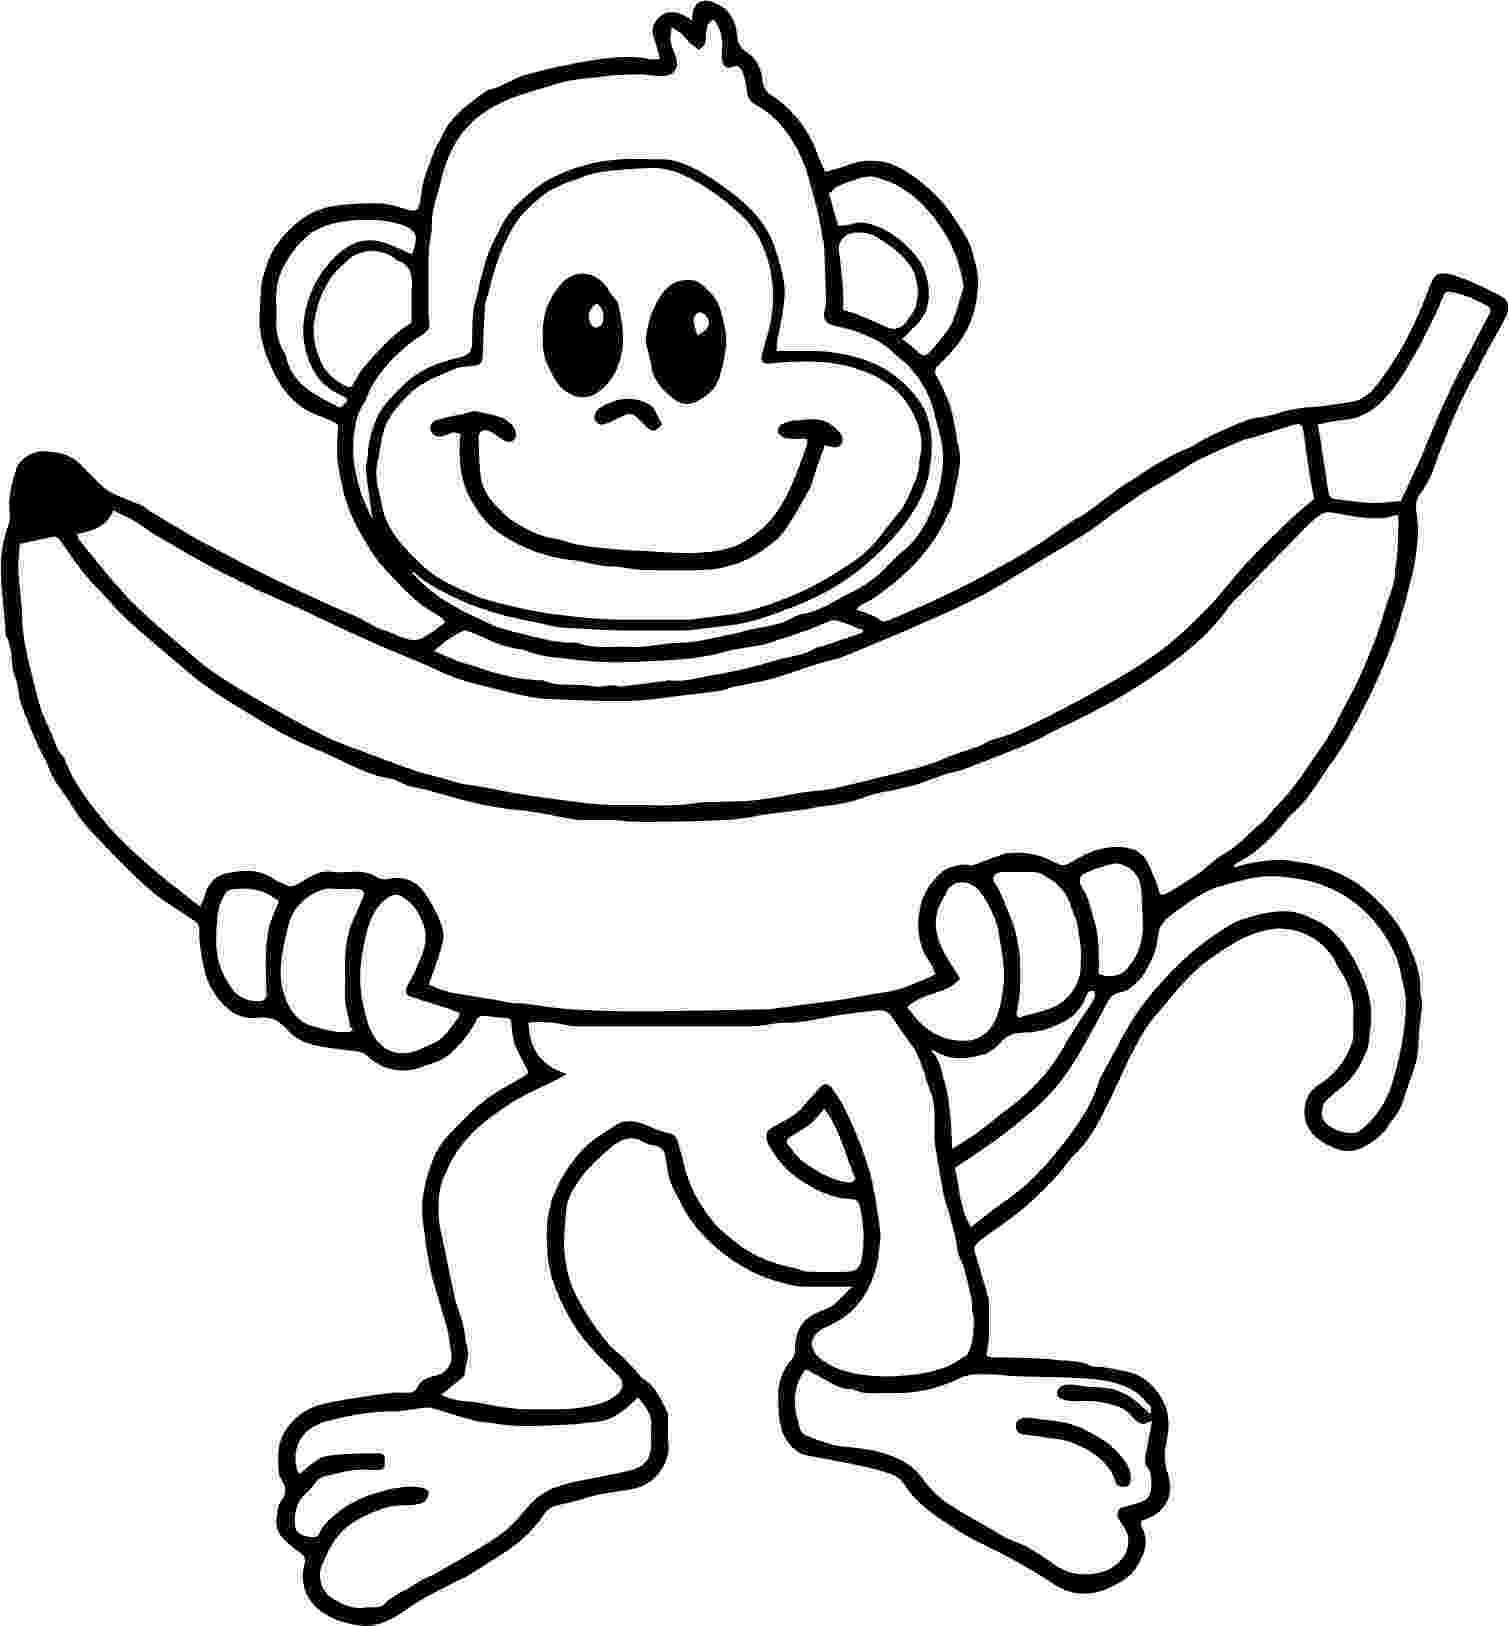 monkey coloring sheet free printable monkey coloring pages for kids coloring sheet monkey 1 1